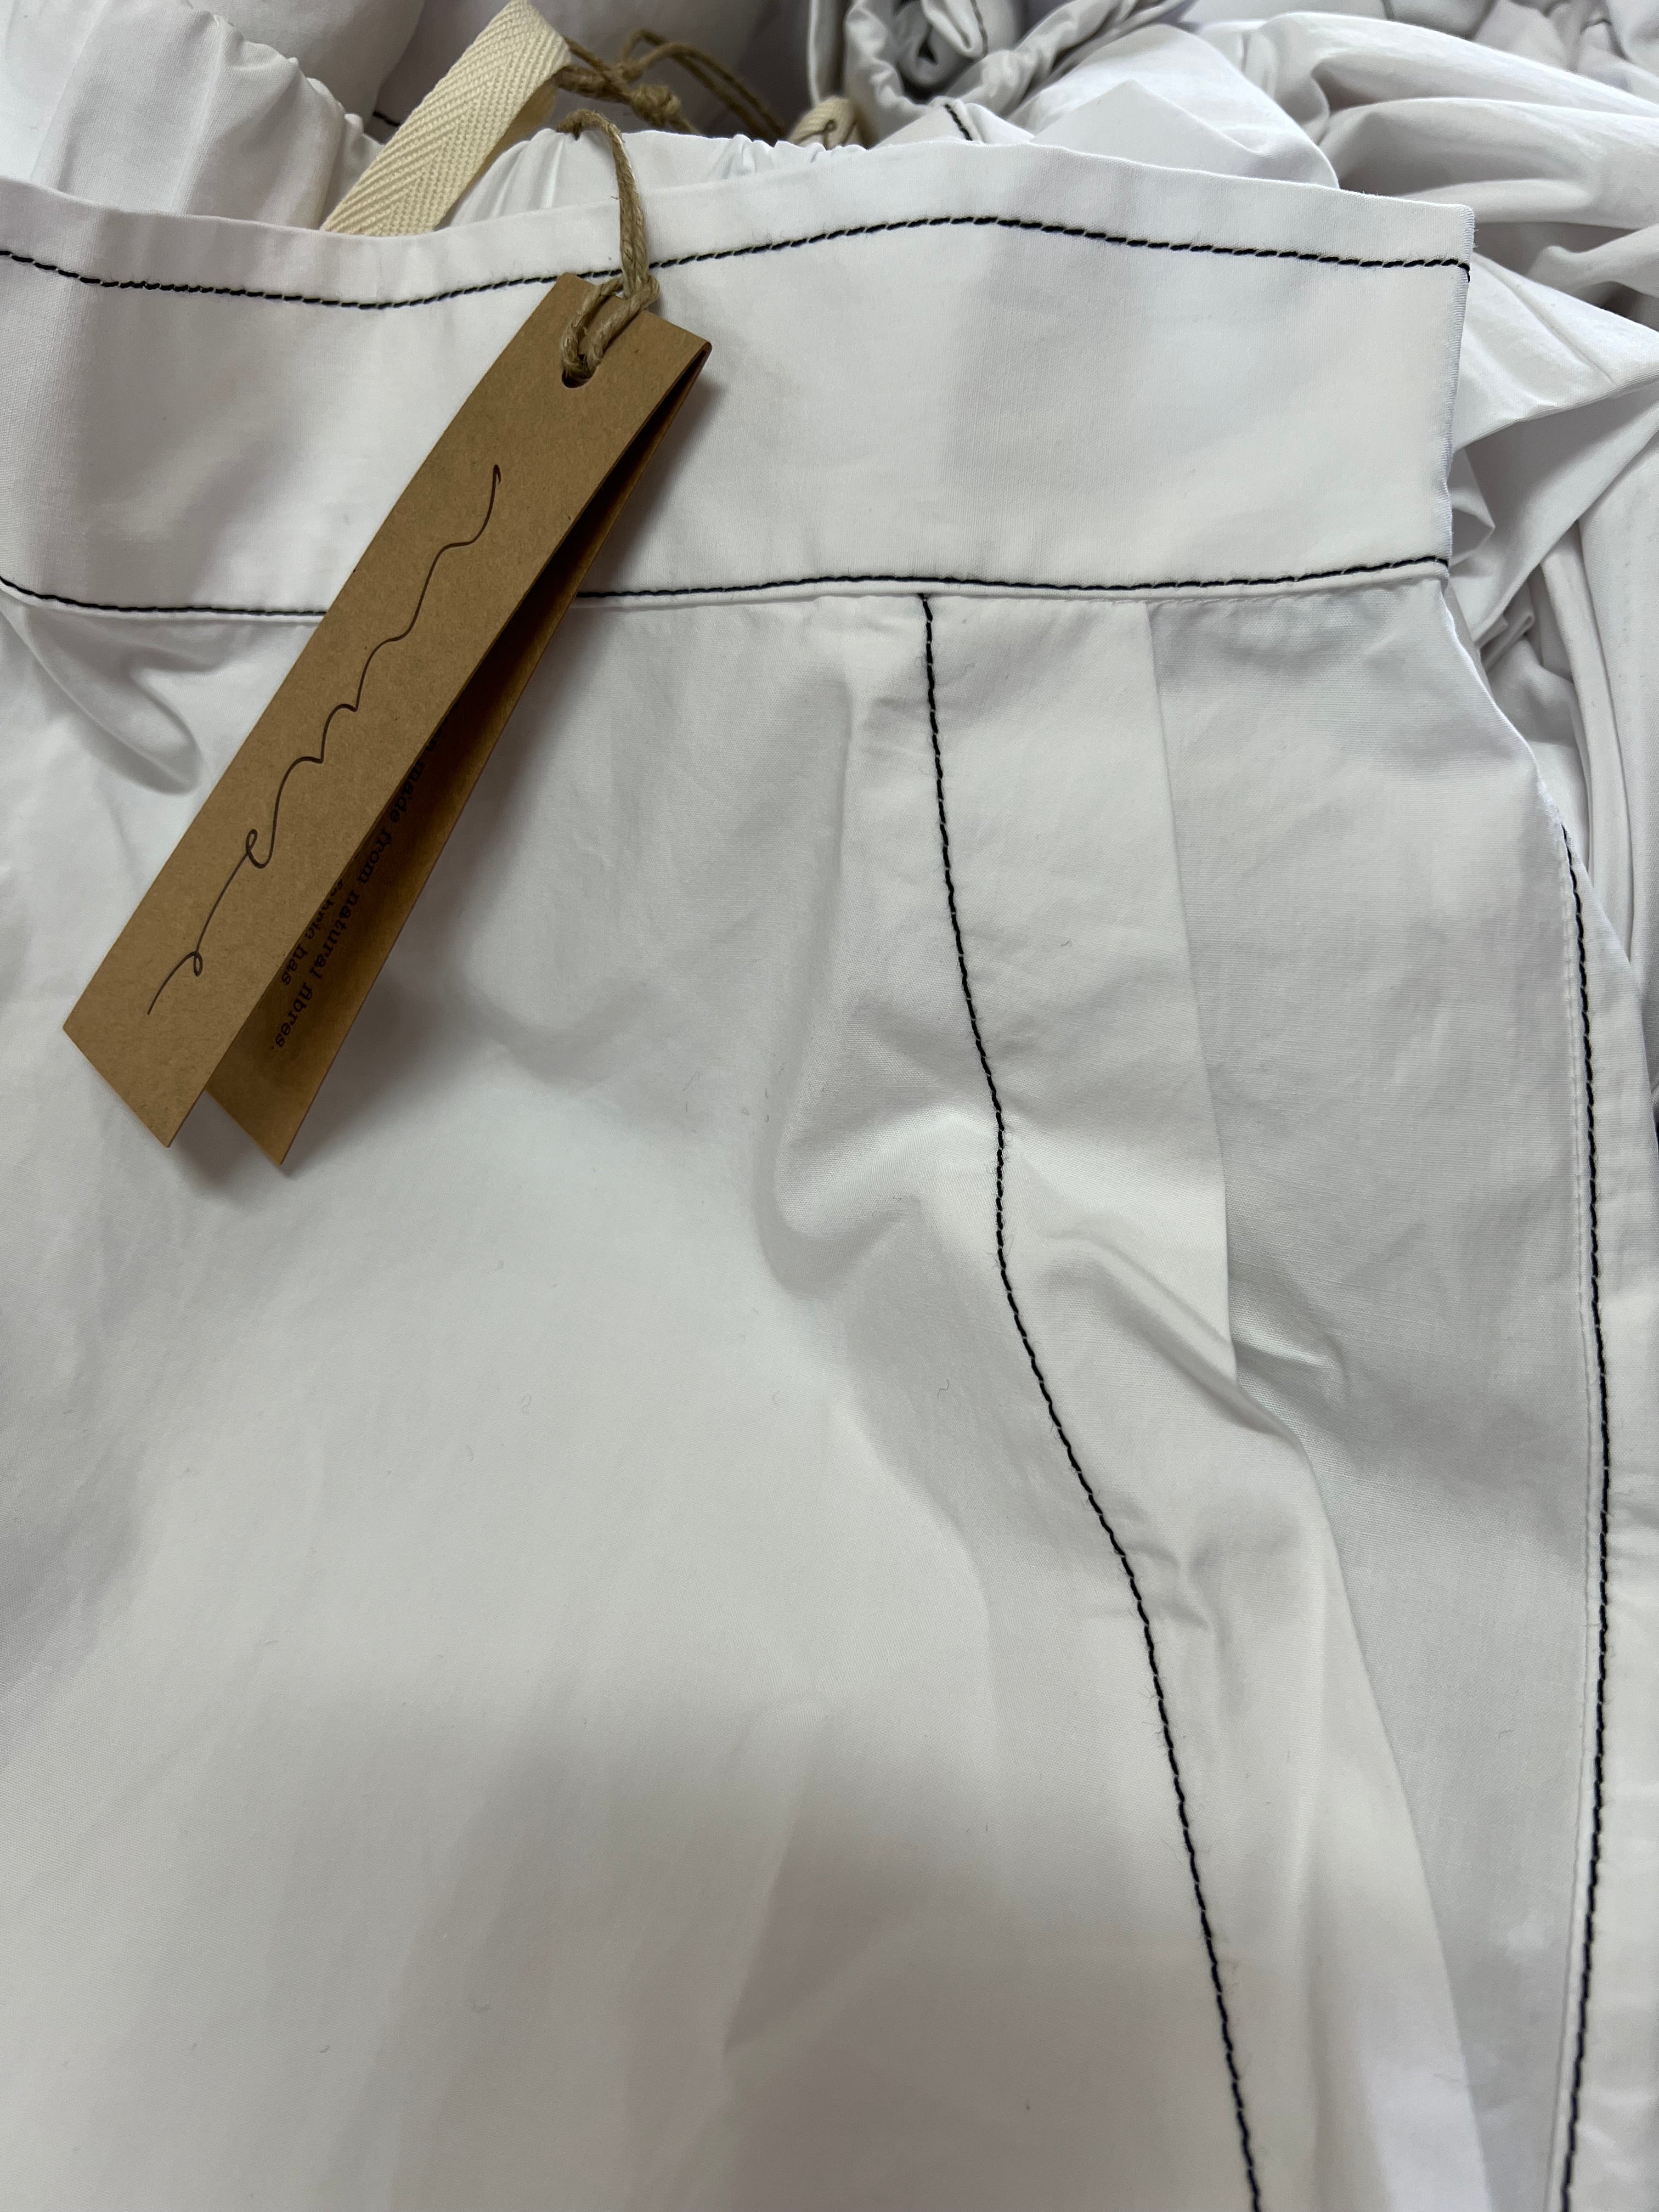 Alira Pant - White Cotton with Black stitching